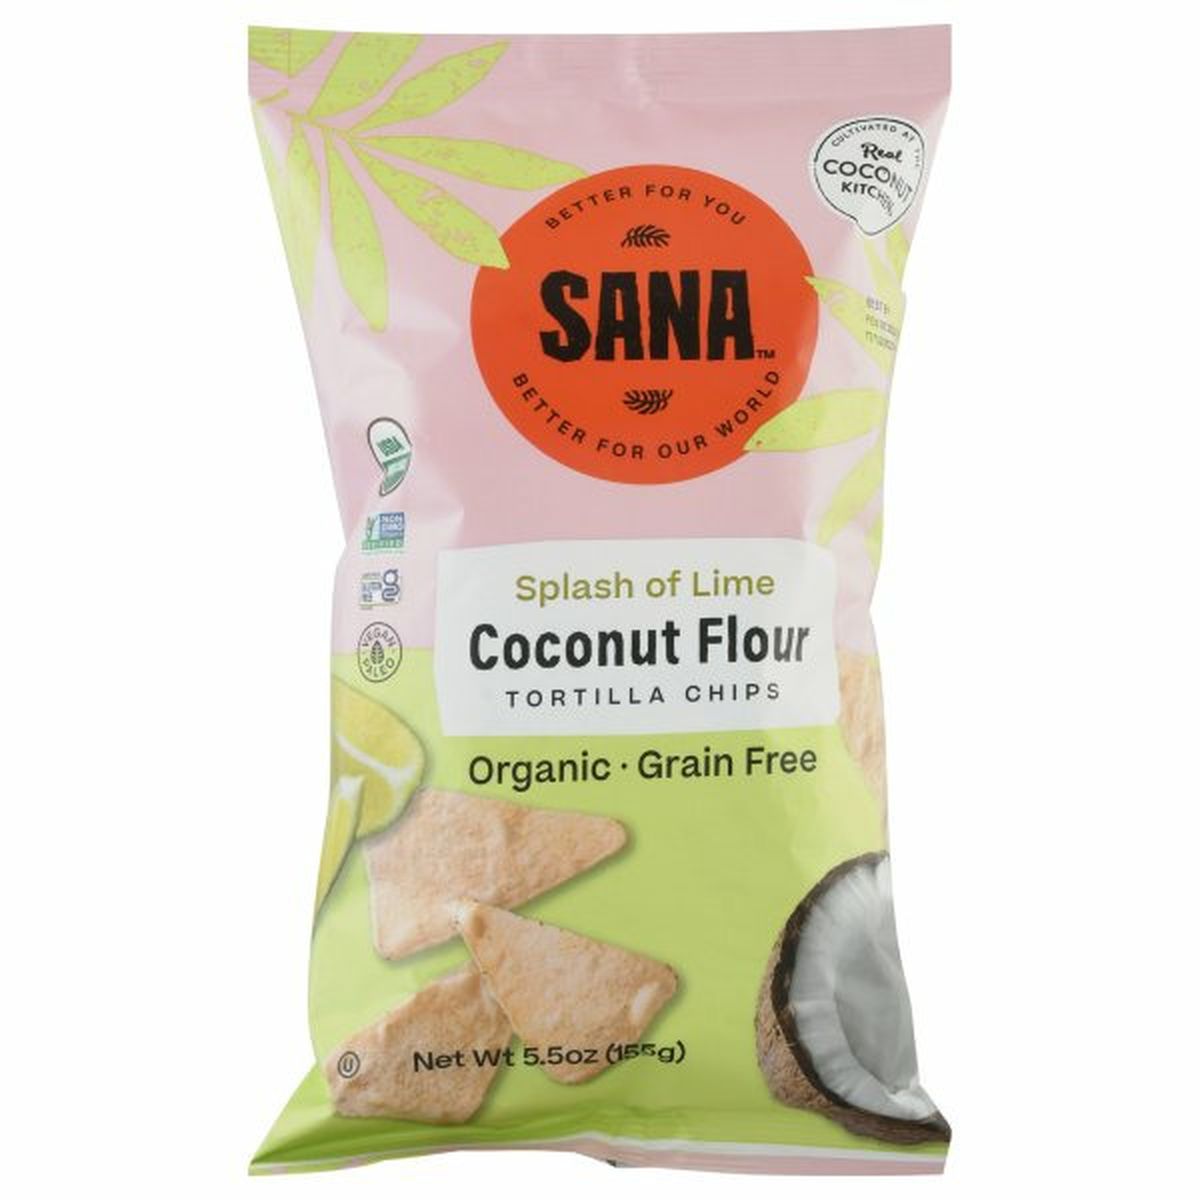 Calories in Sana Tortilla Chips, Coconut Flour, Splash of Lime